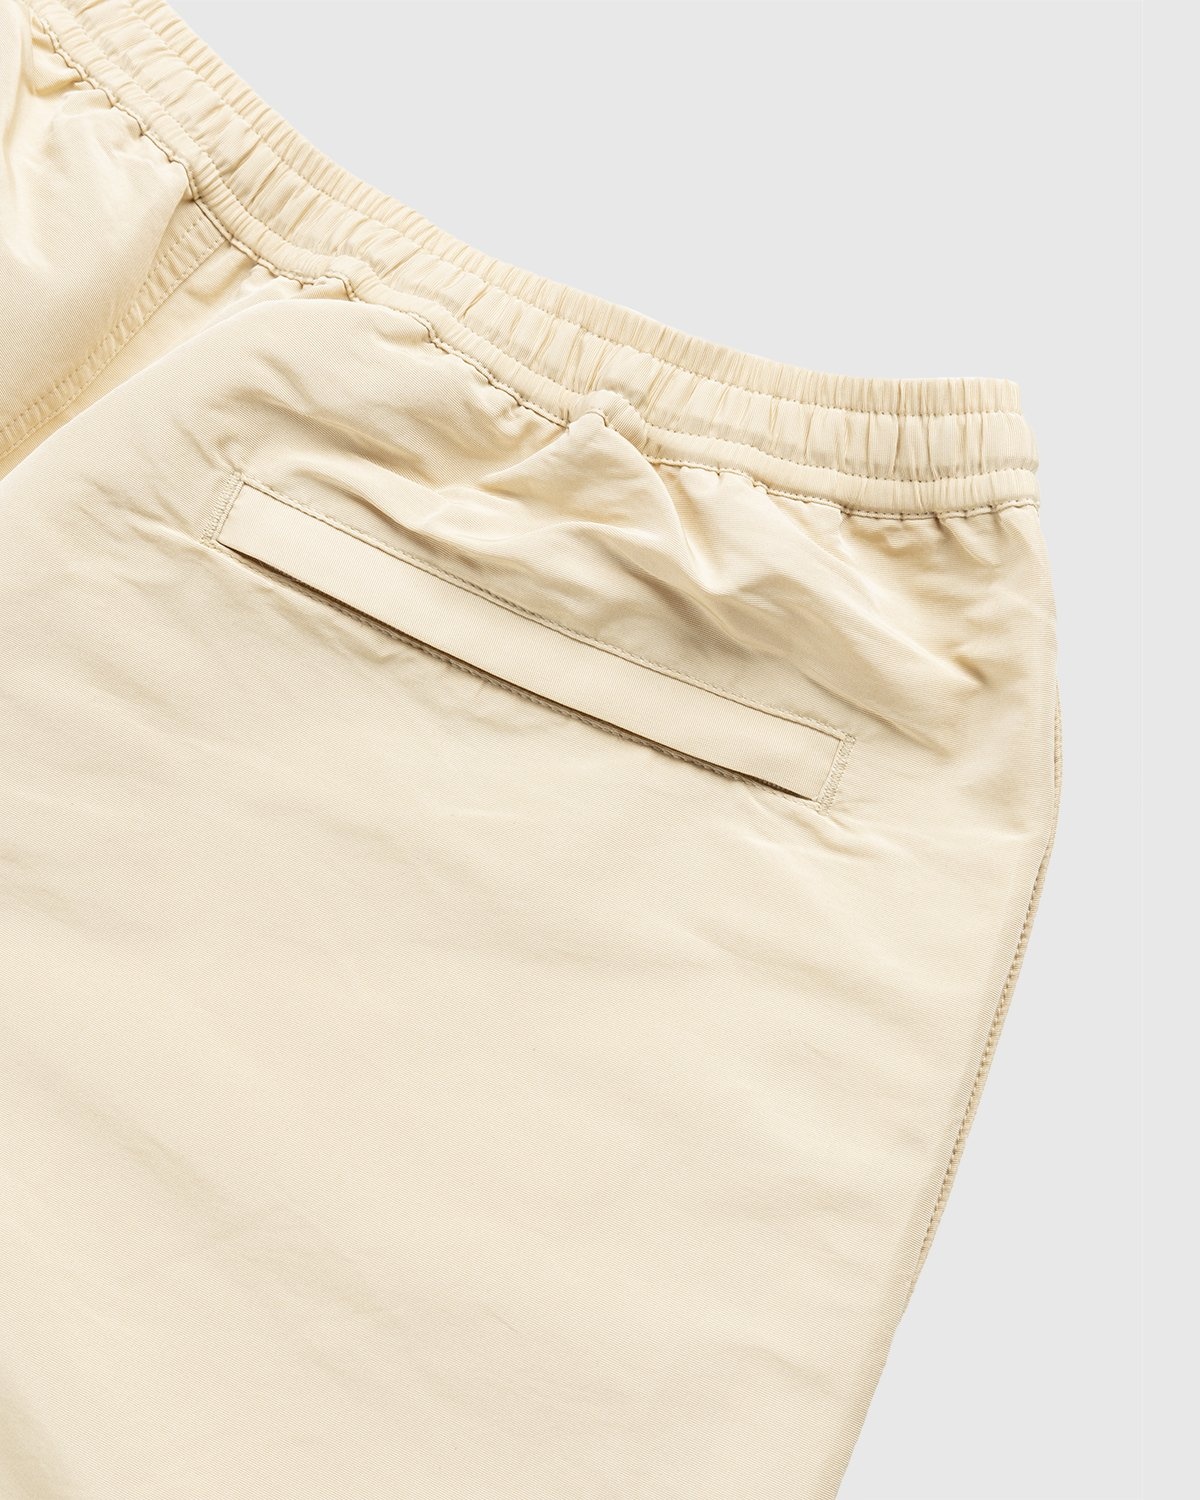 Acne Studios – Taffeta Shorts Sand Beige - Active Shorts - Beige - Image 3